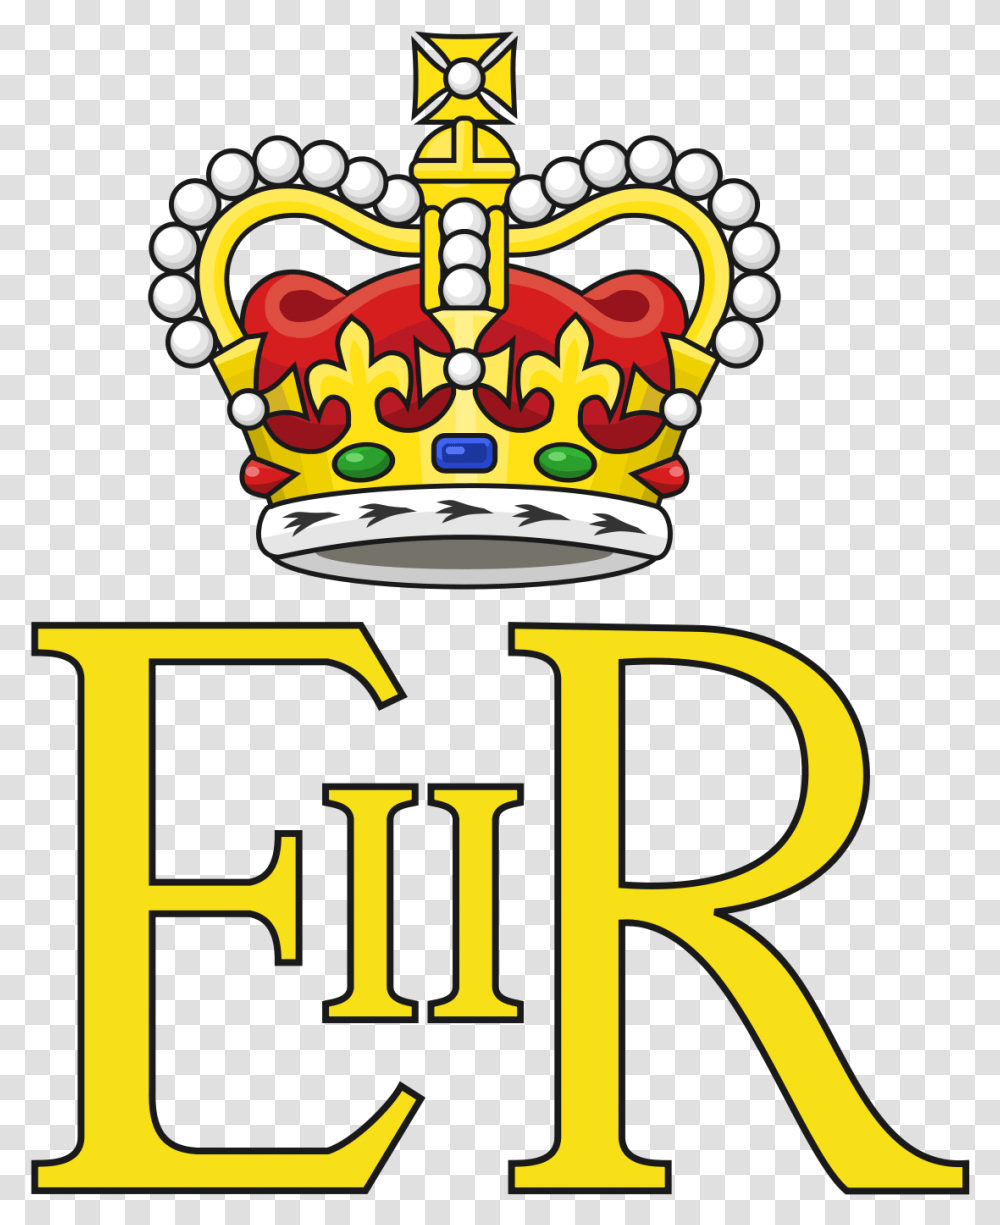 Royal Cypher Of Queen Elizabeth Ii Queen Elizabeth Royal Cypher, Label, Text, Logo, Symbol Transparent Png